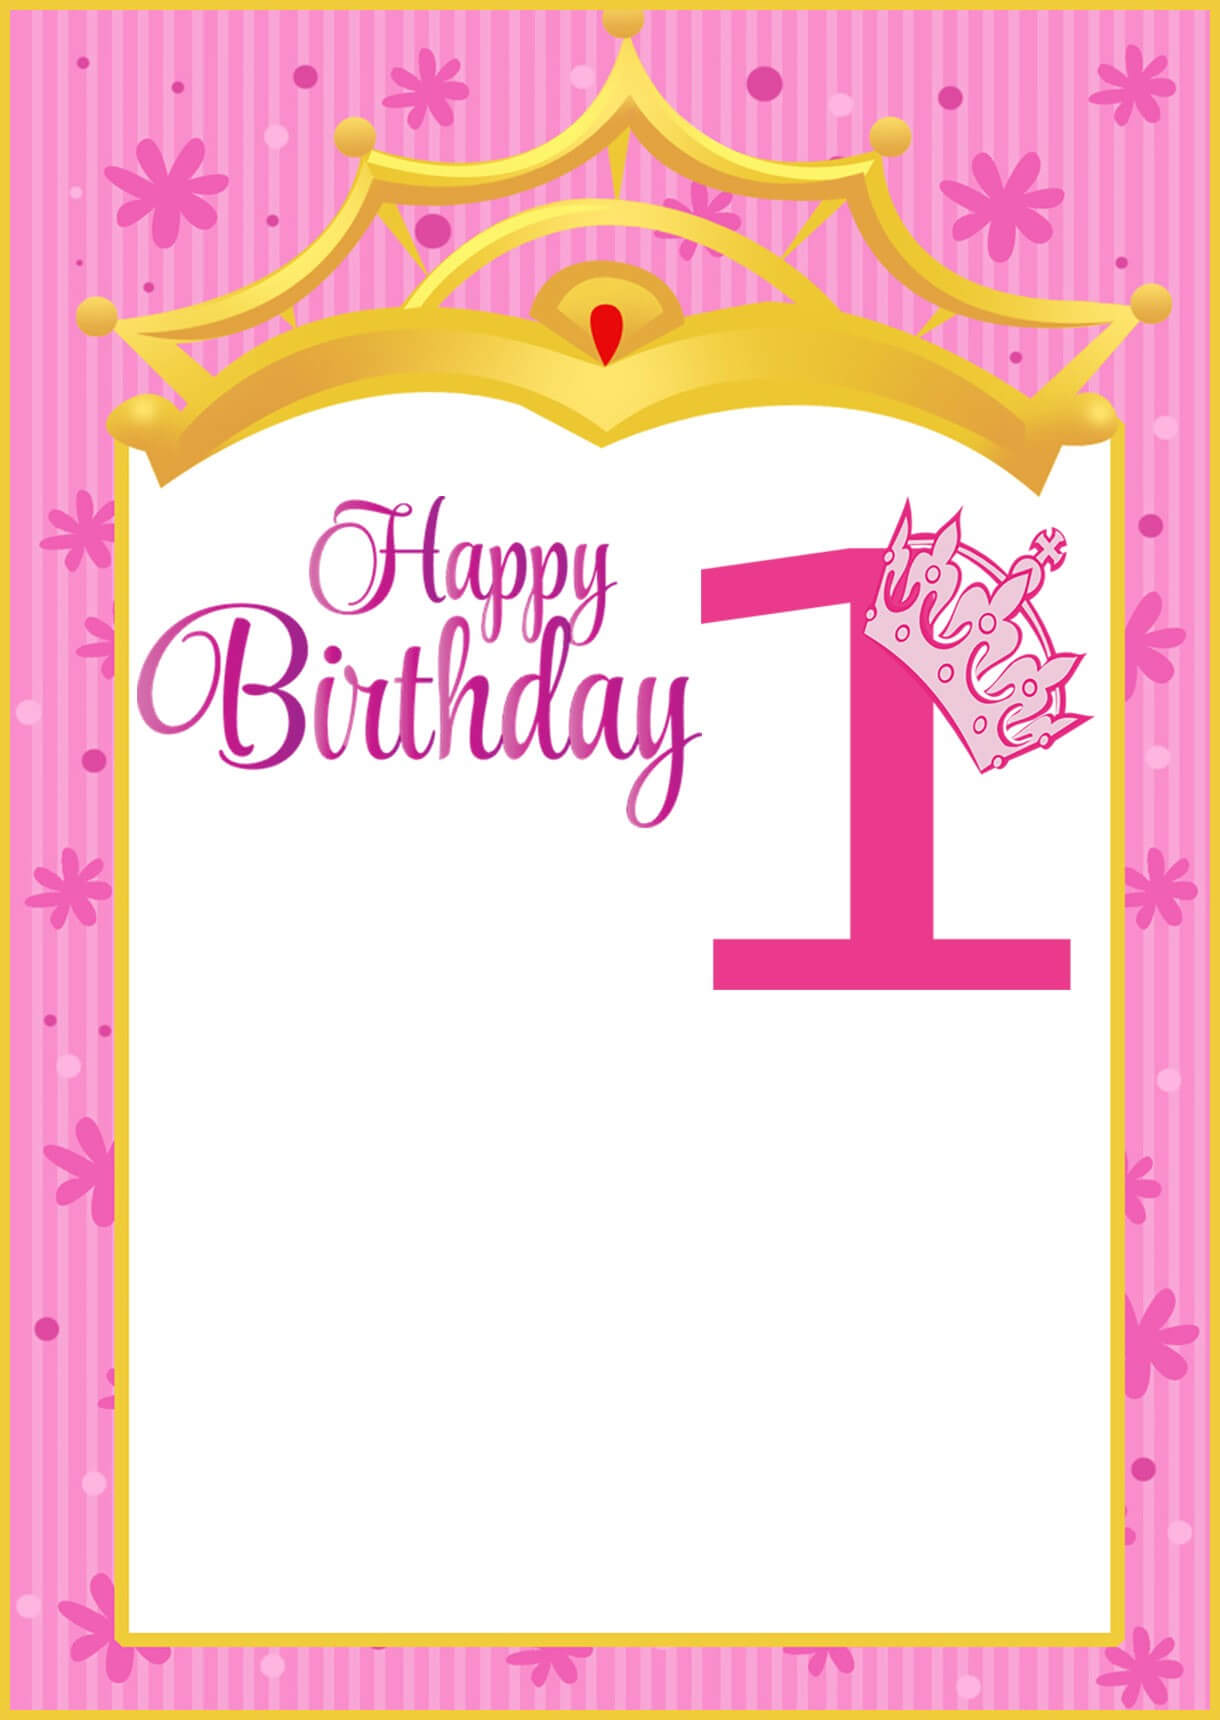 Printable First Birthday Invitation Card | Invitations Online With Regard To First Birthday Invitation Card Template